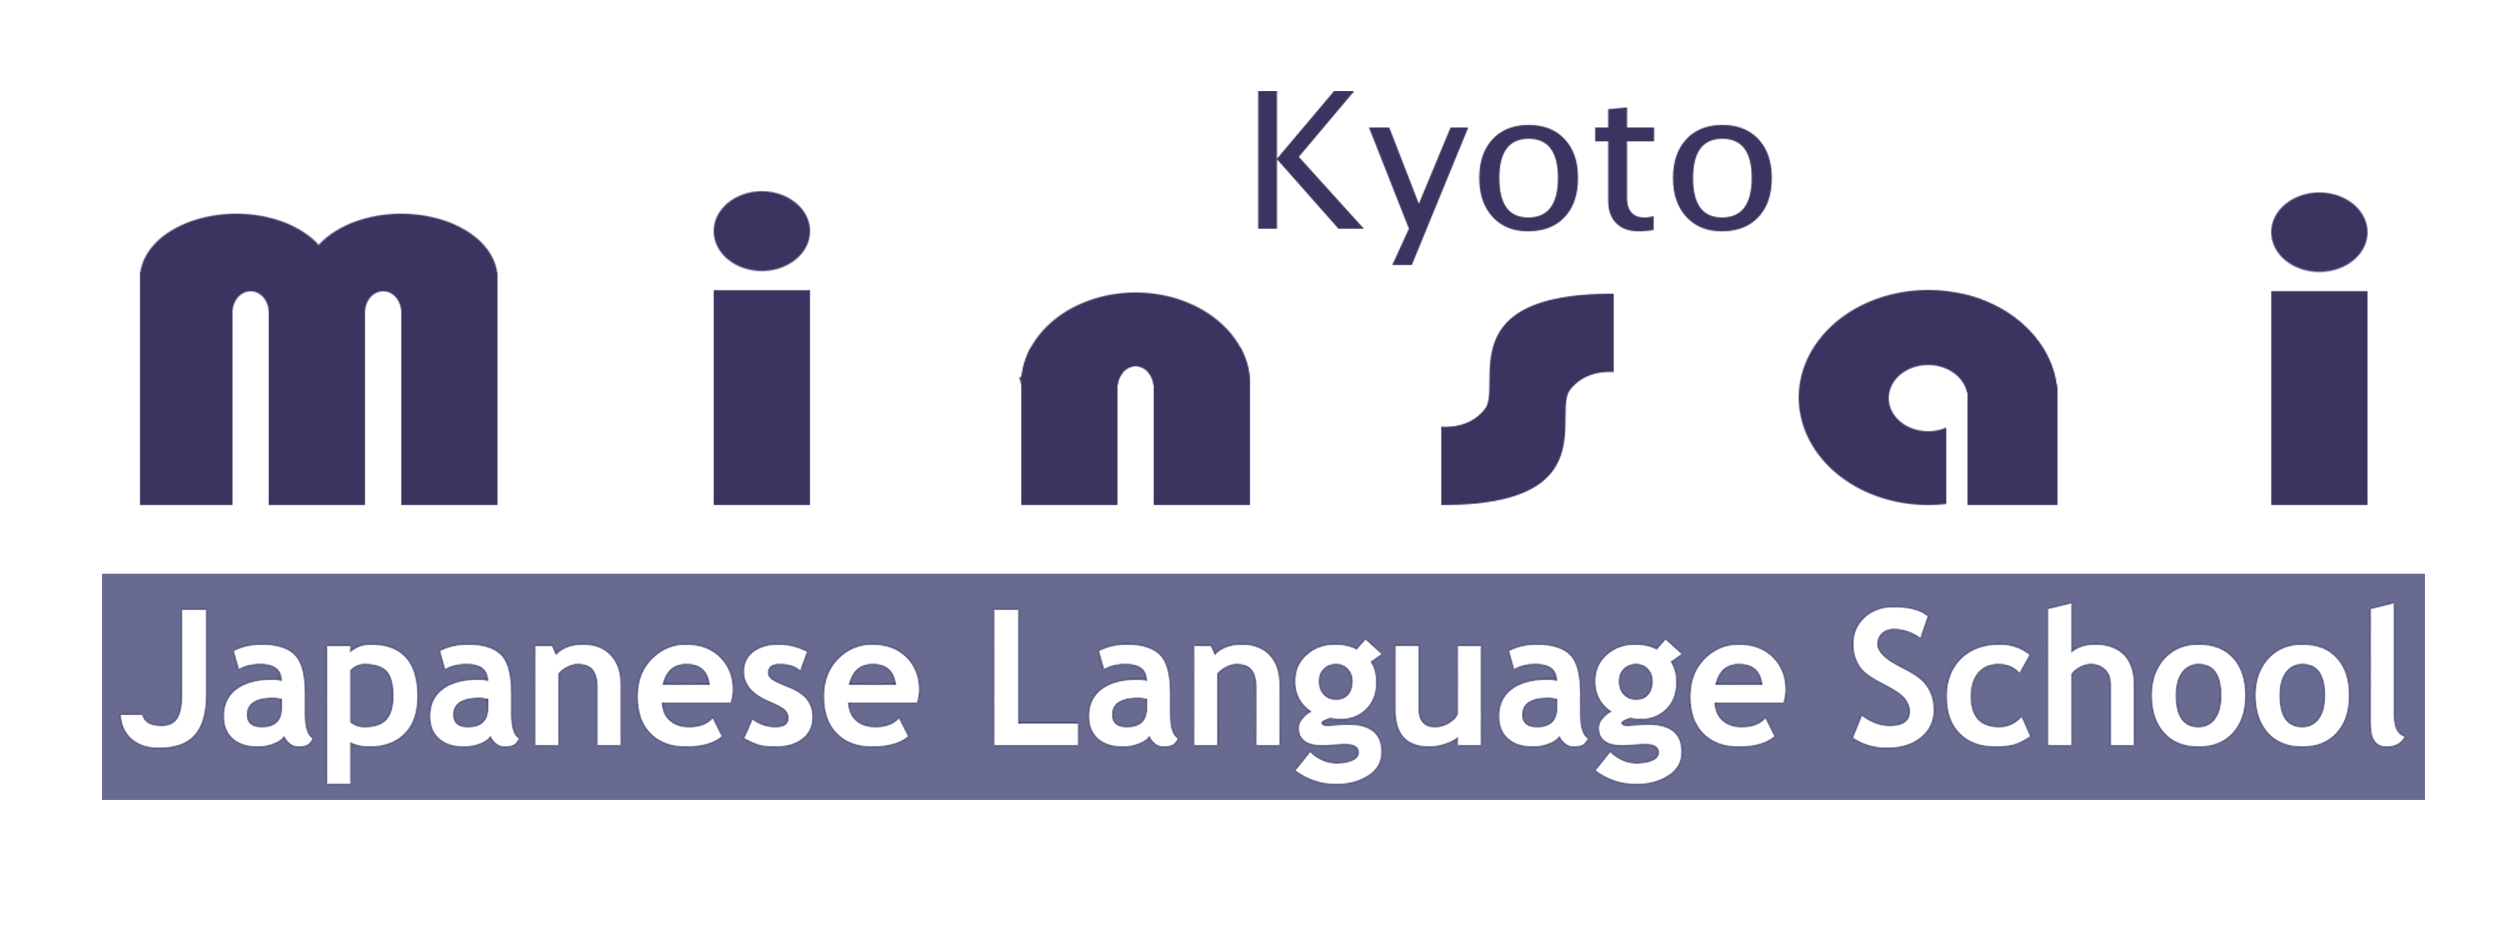 kyoto minsai logo